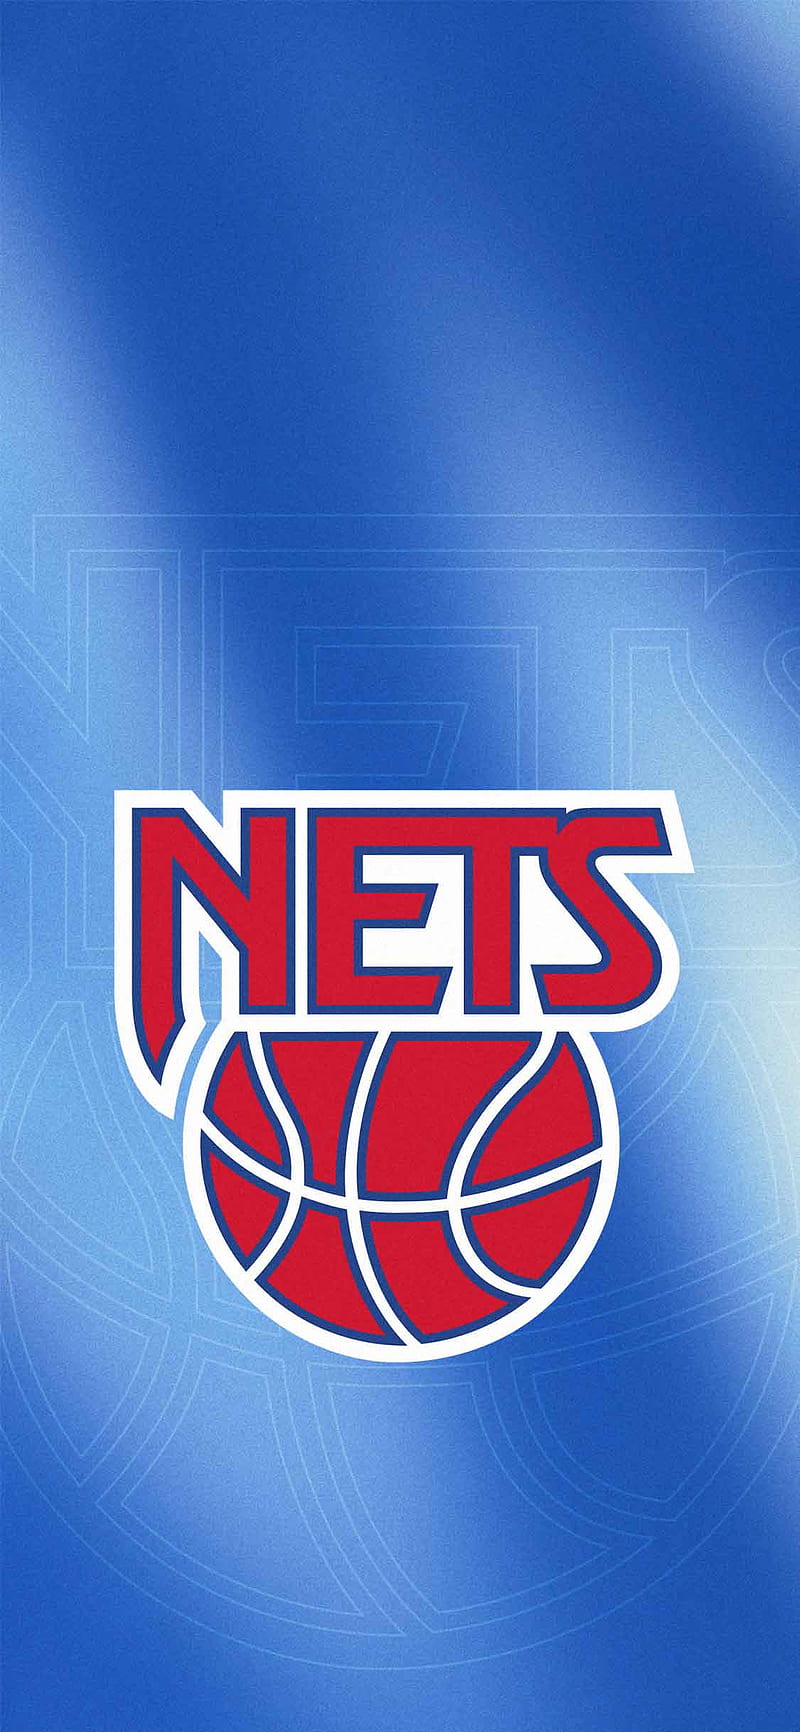 Brooklyn Nets Wallpapers  Top 25 Best Brooklyn Nets Backgrounds Download